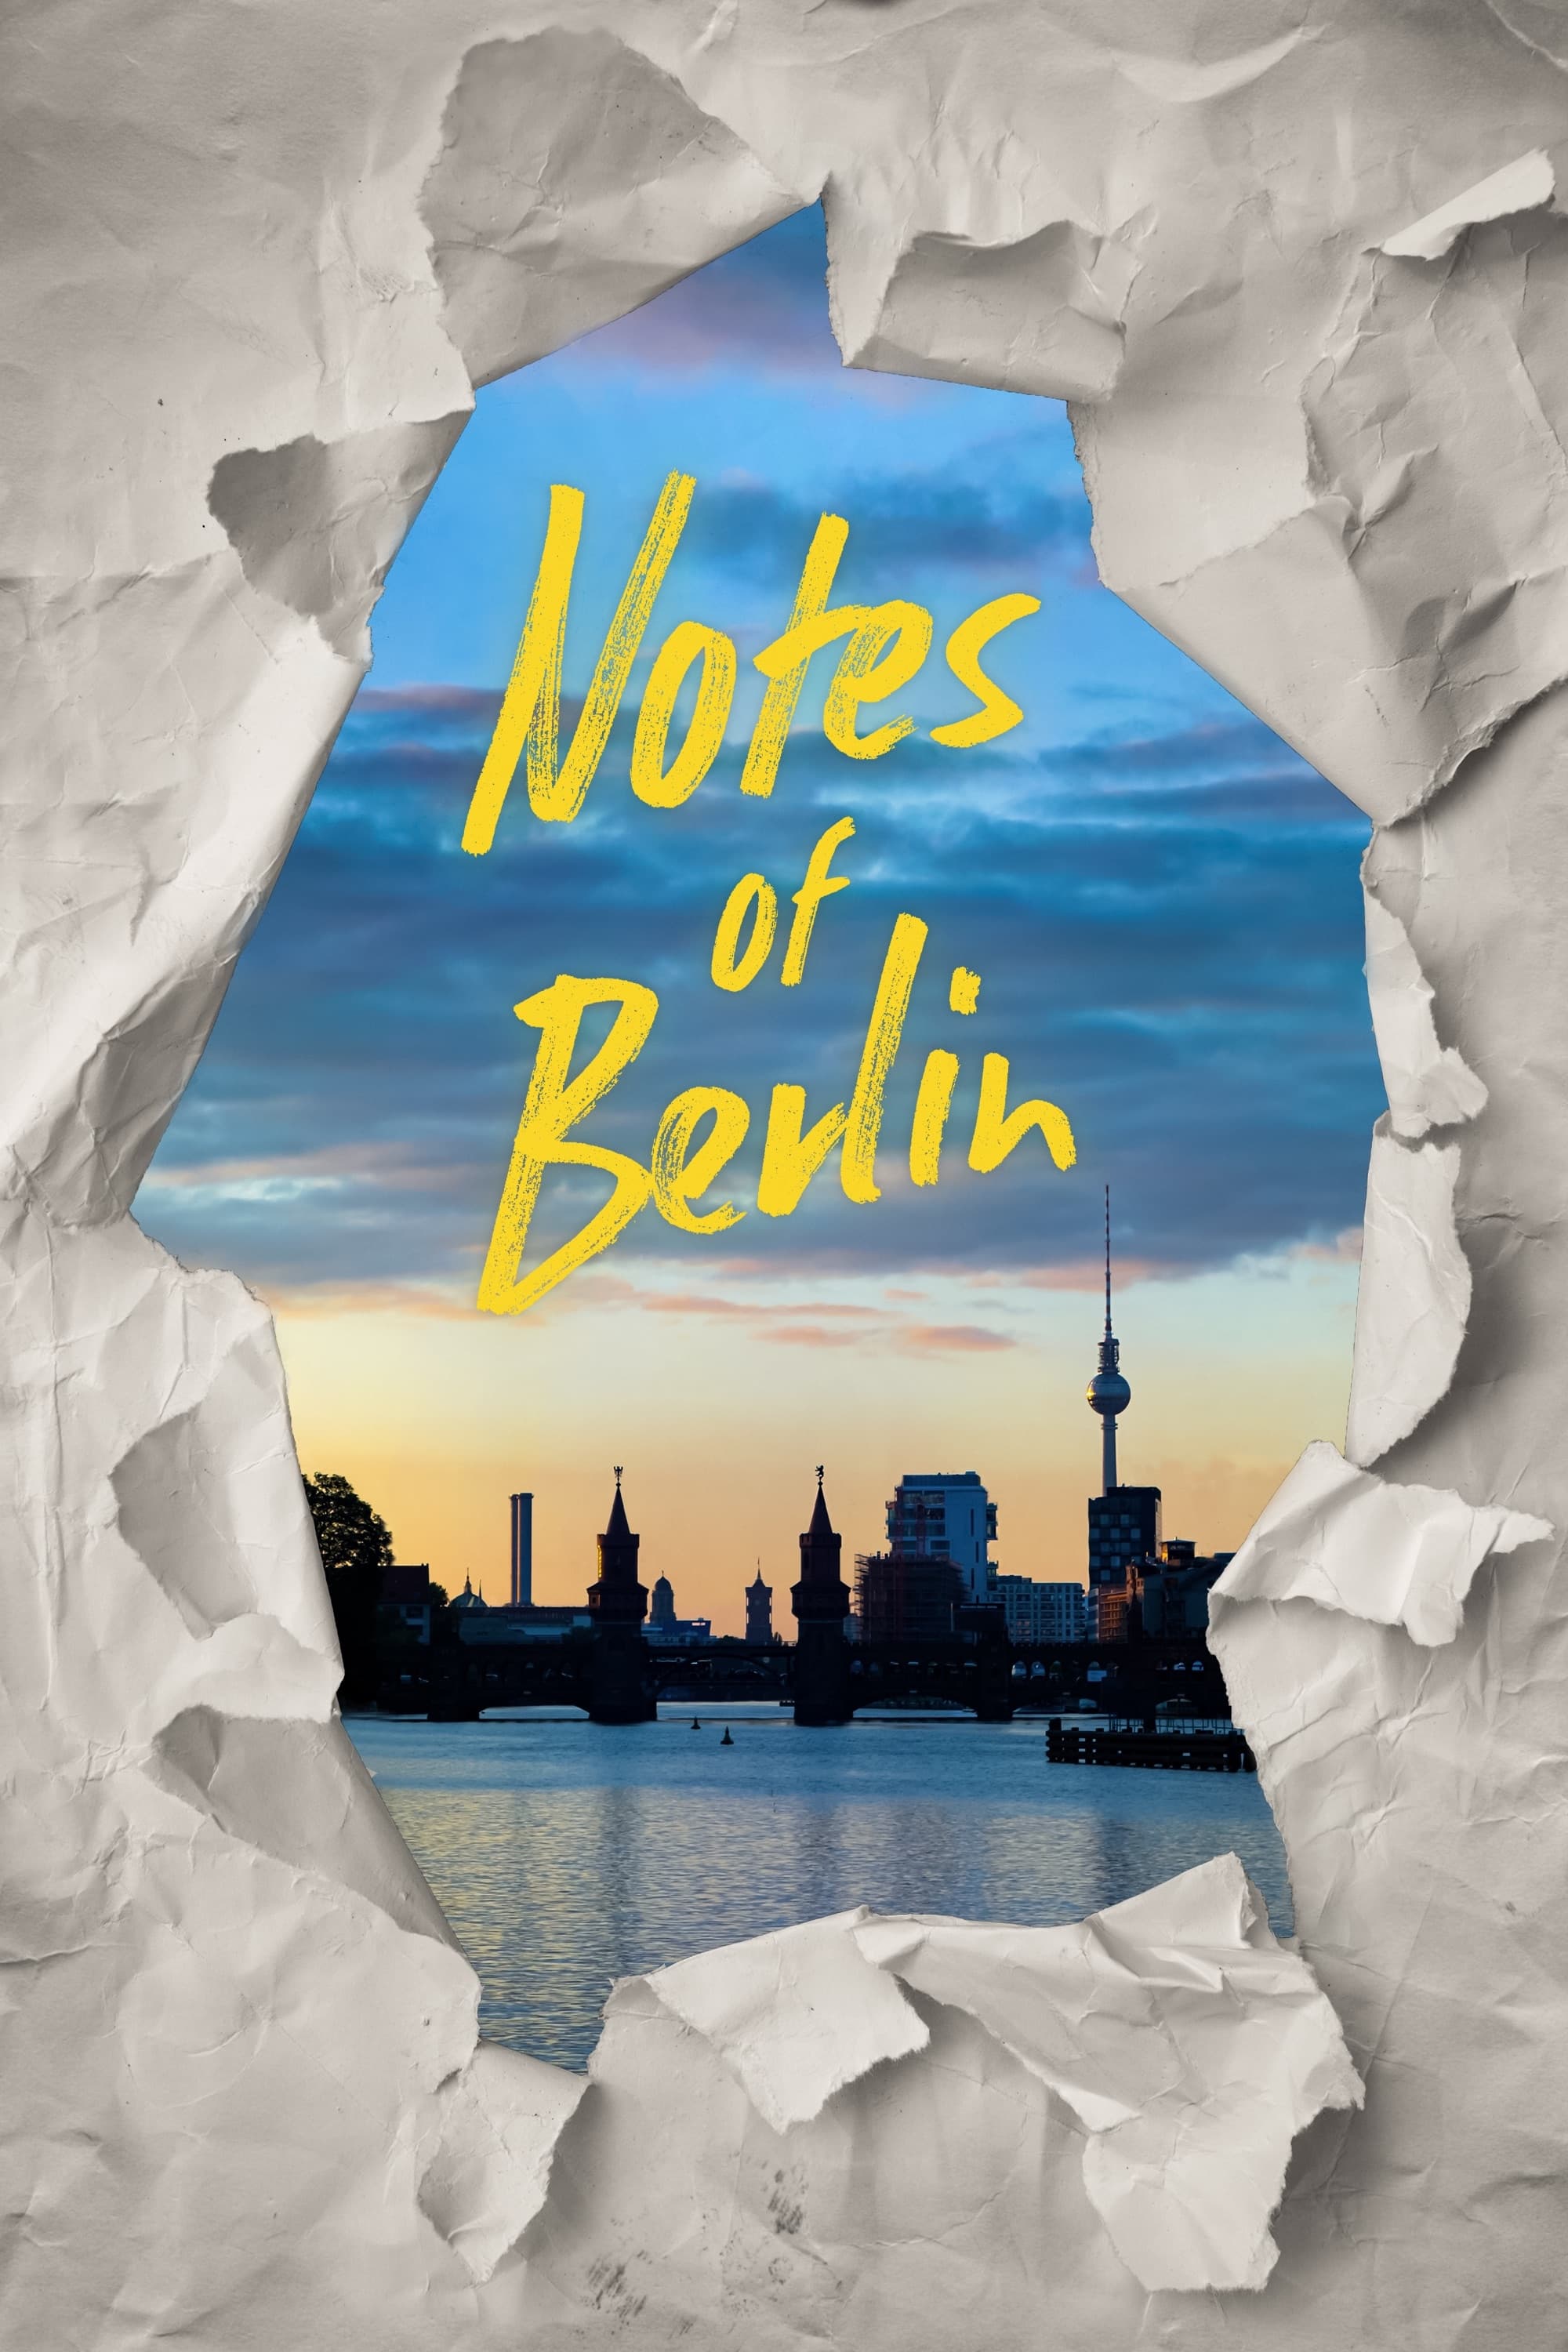 Notes of Berlin (2021)